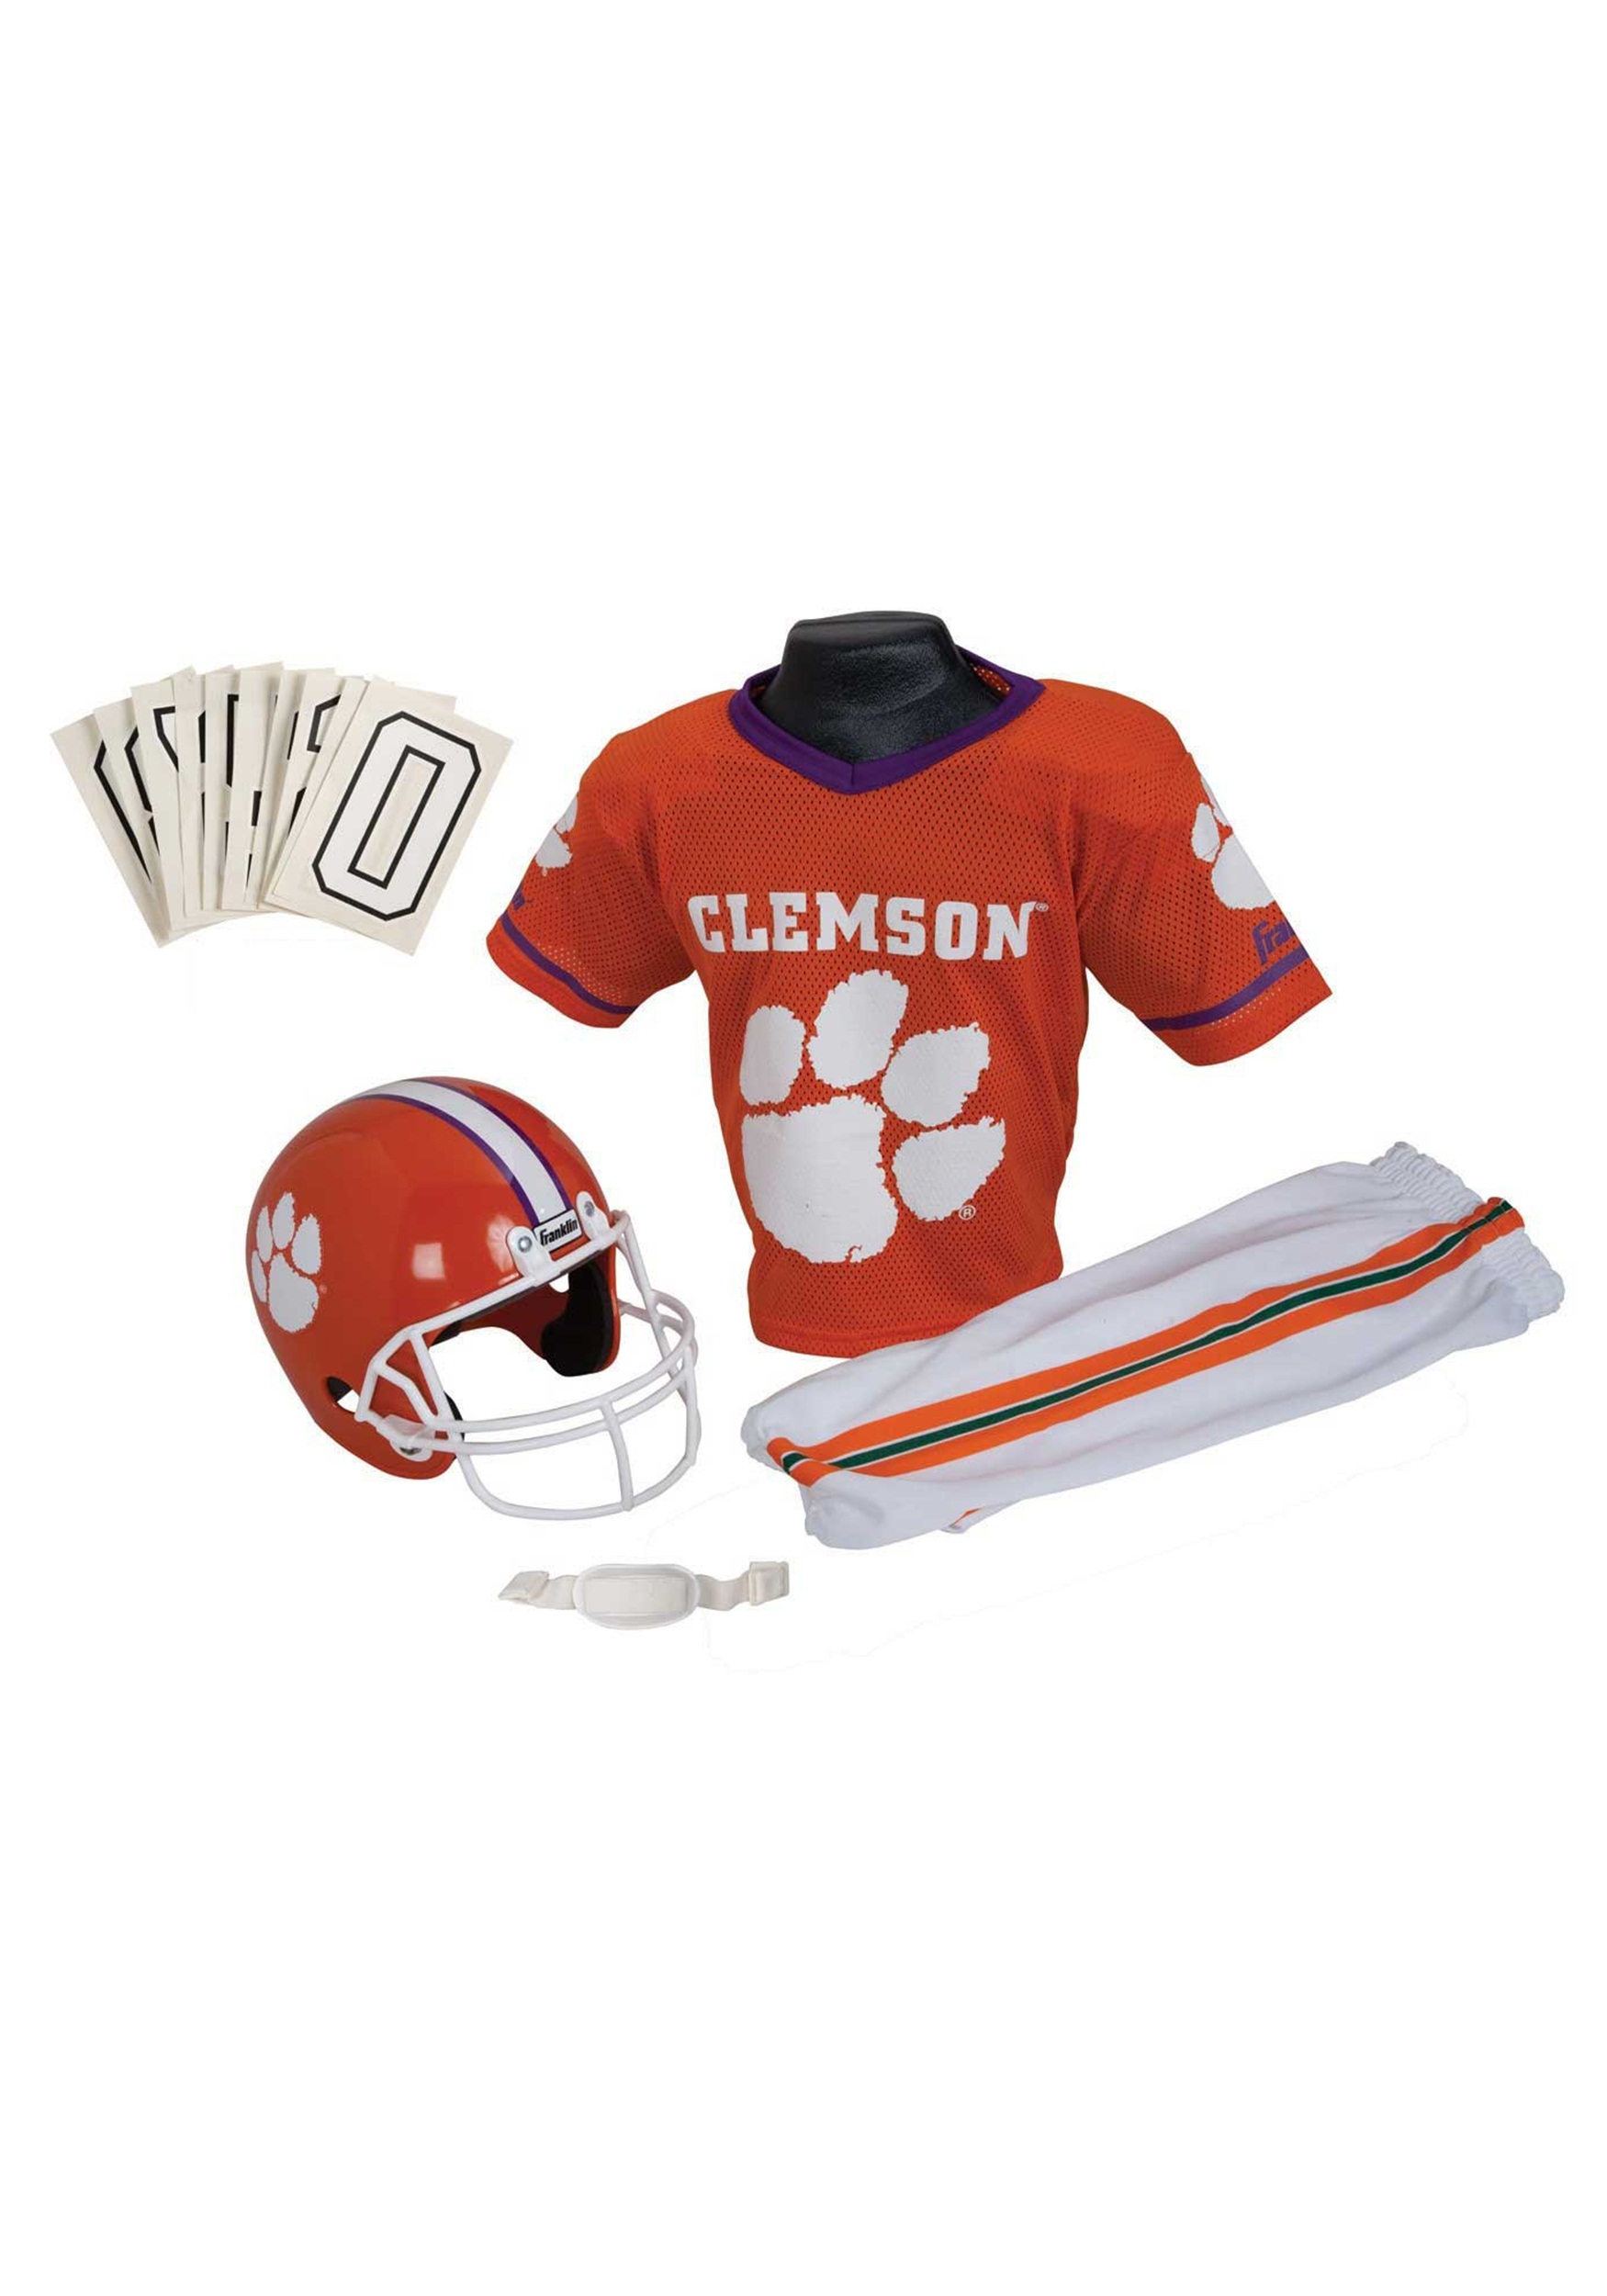 Clemson Tigers Child Football Uniform Costume